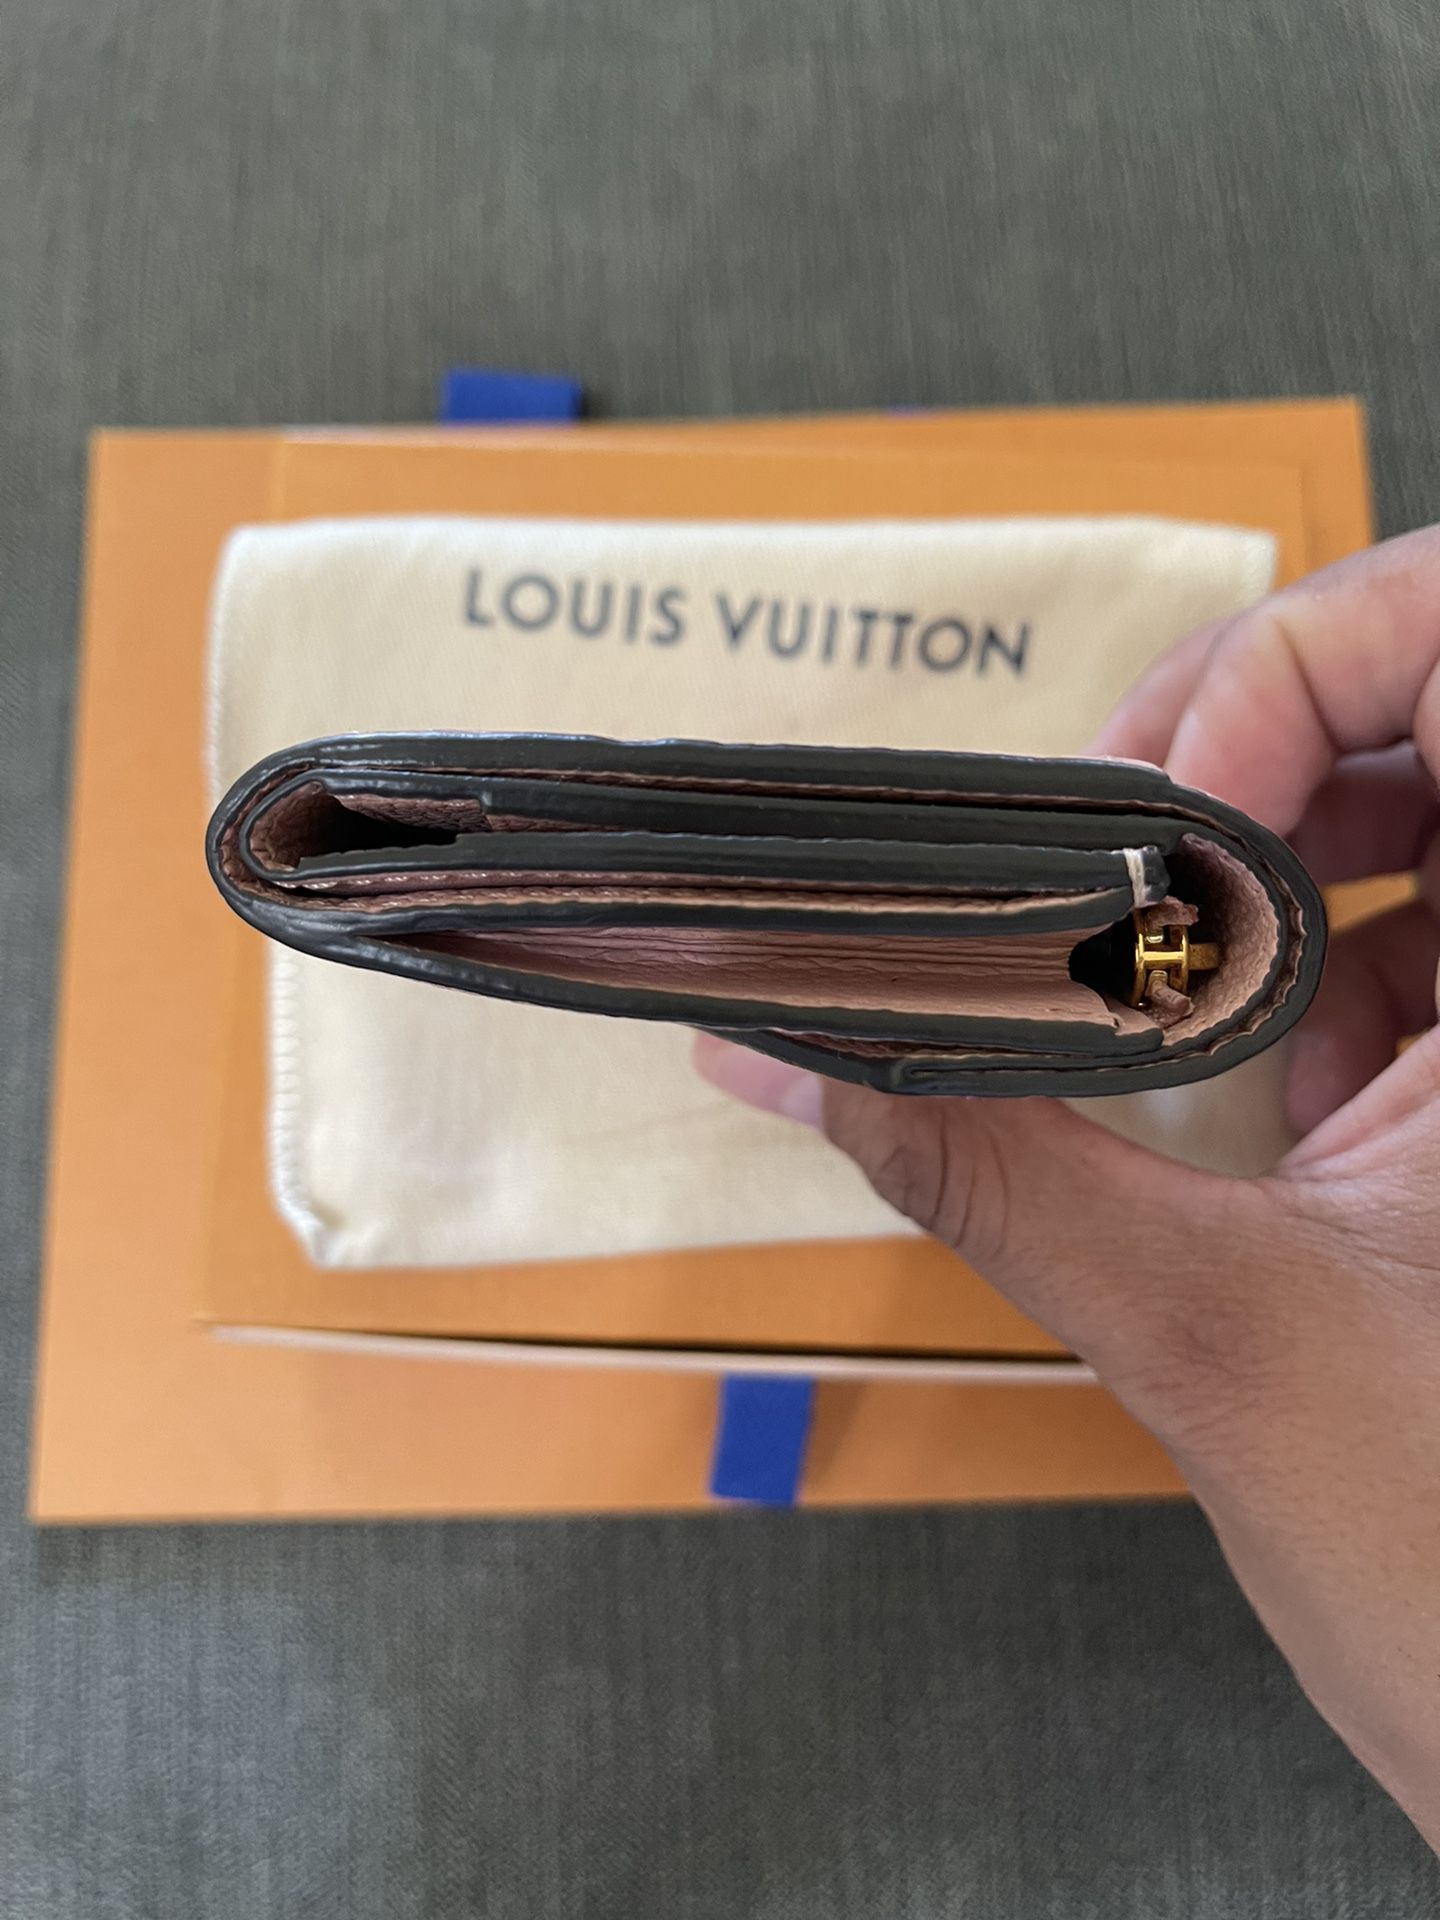 Louis Vuitton Emilie wallet insert for Sale in Scottsdale, AZ - OfferUp